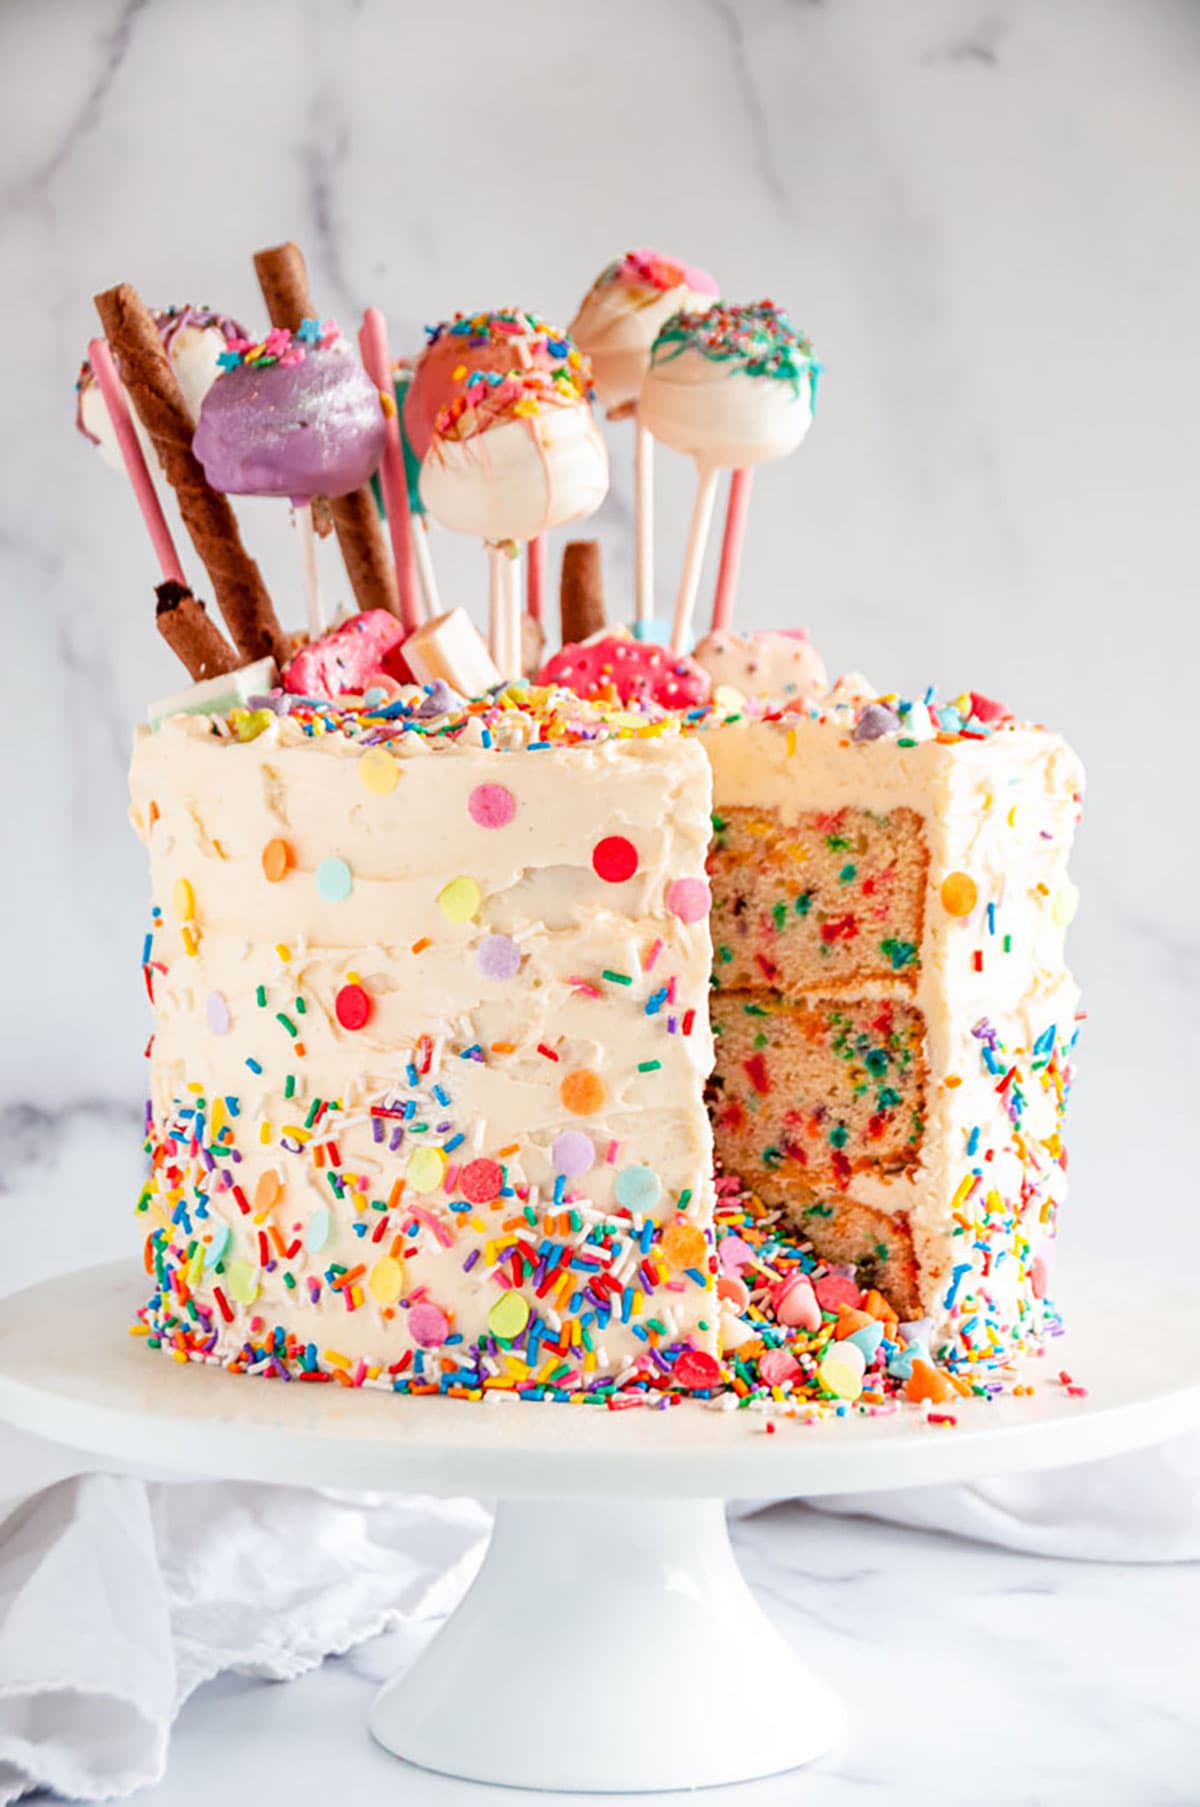 Romantic Cake Design Ideas For Wife's Birthday - Bakingo